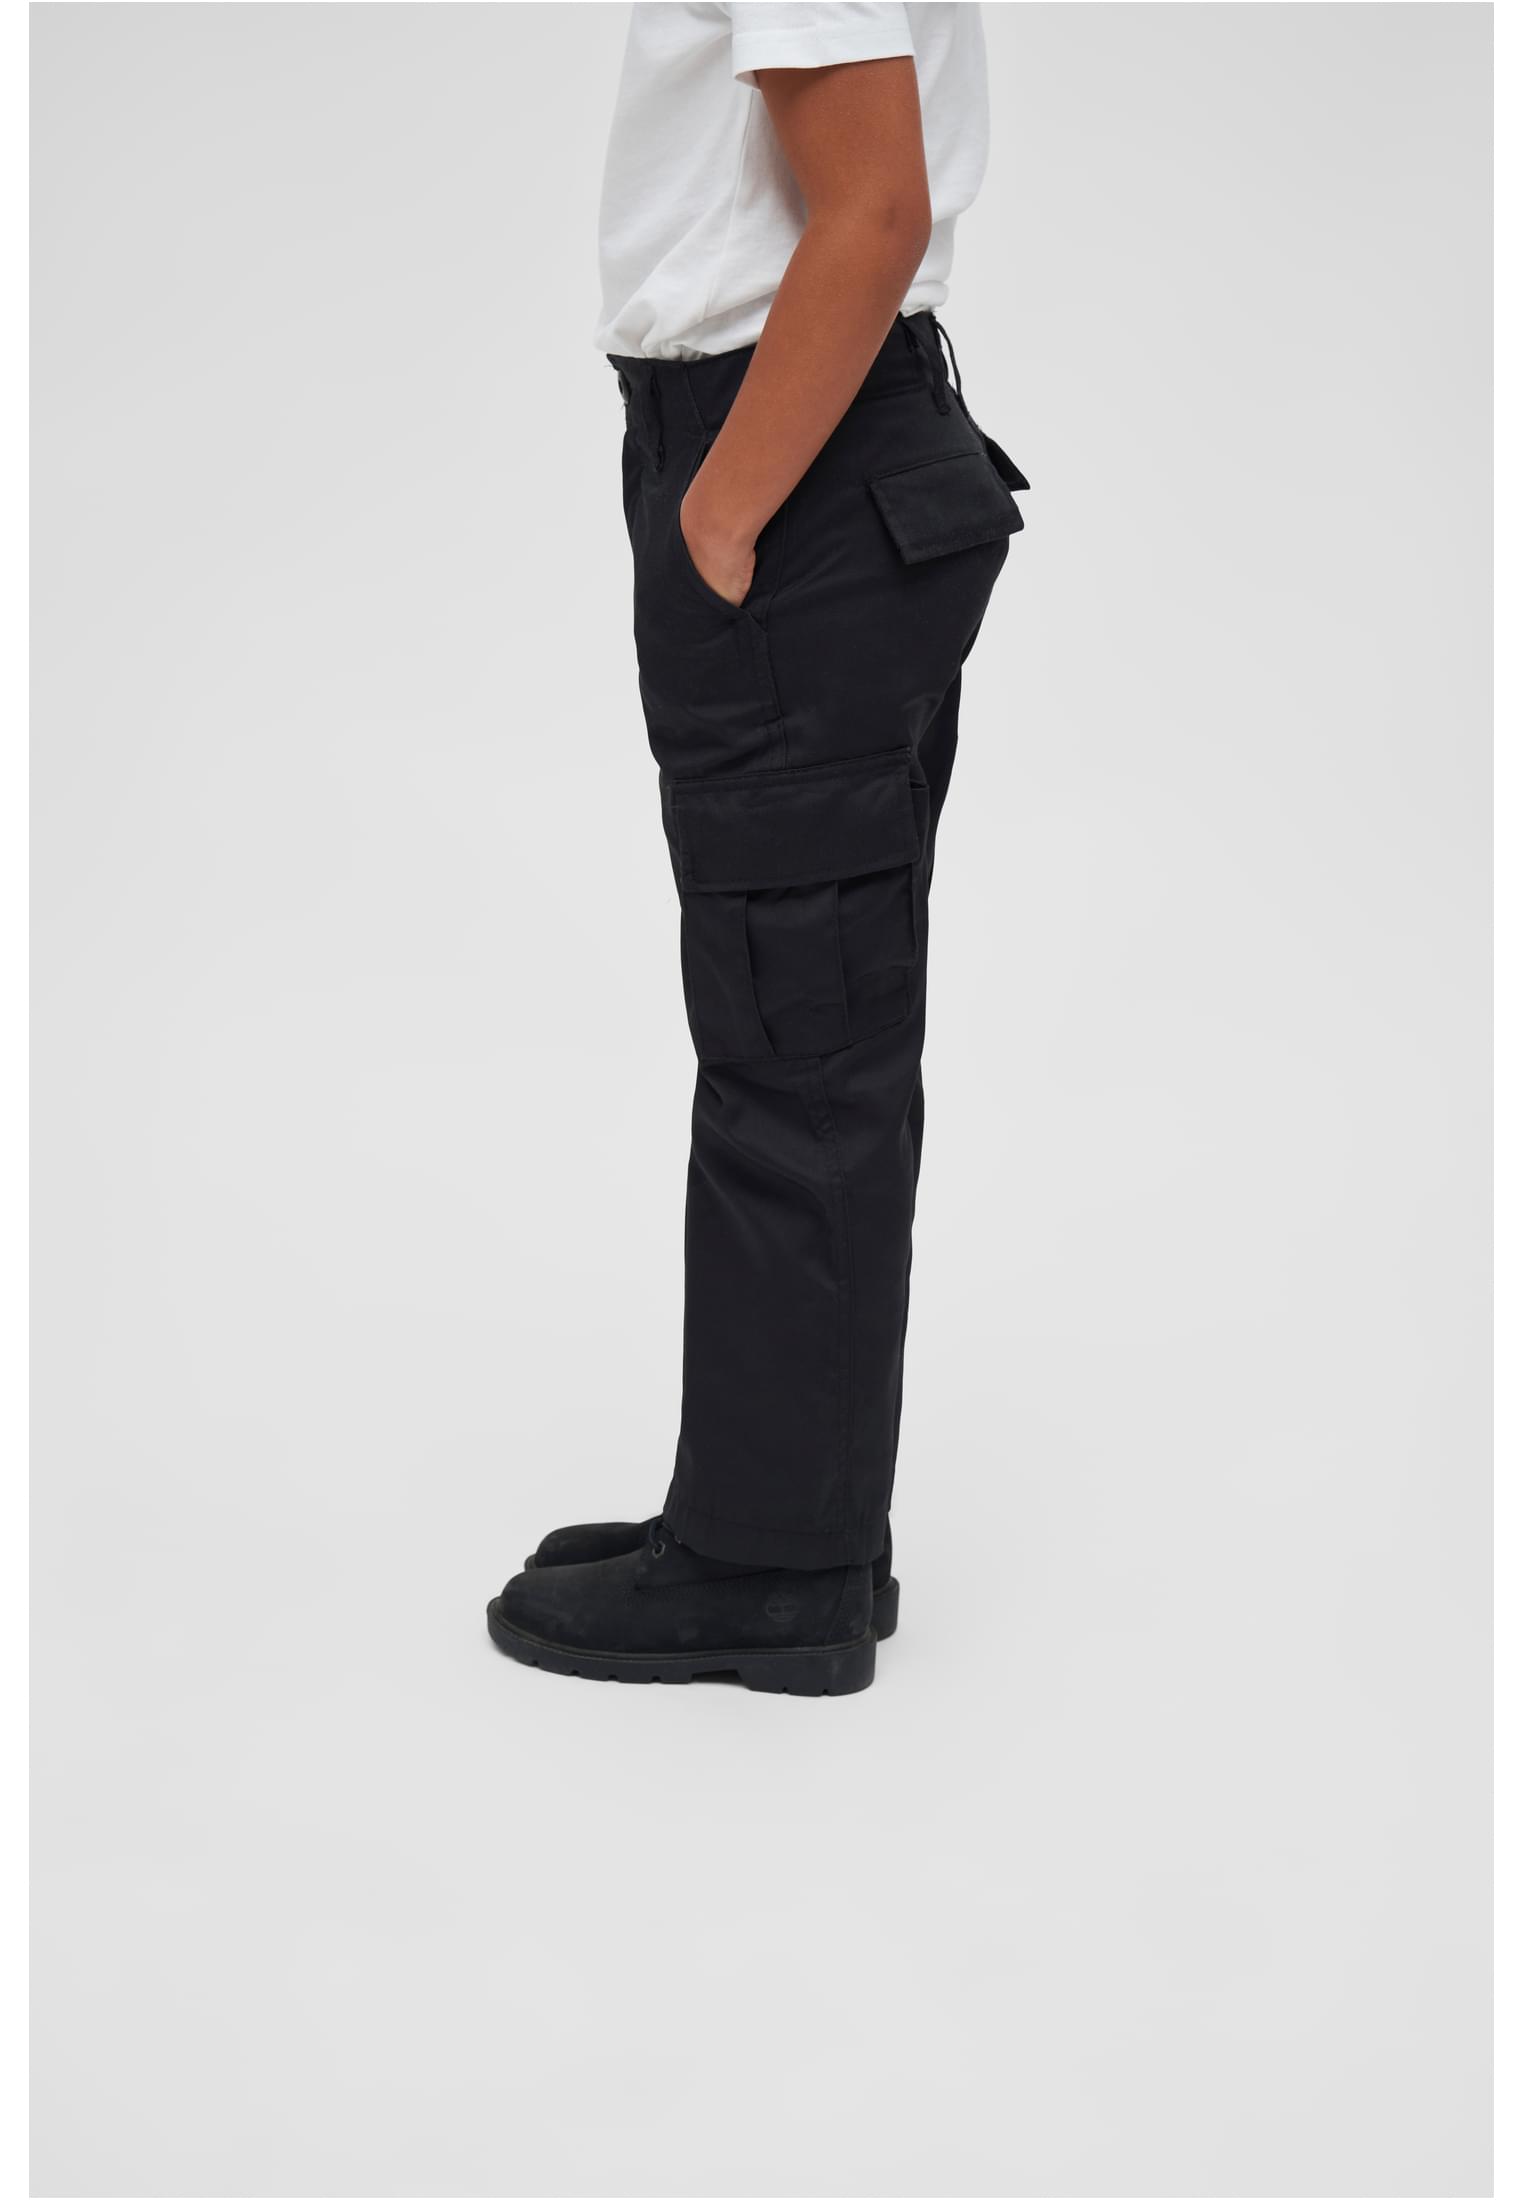 Kinder Kids US Ranger Trouser in Farbe black